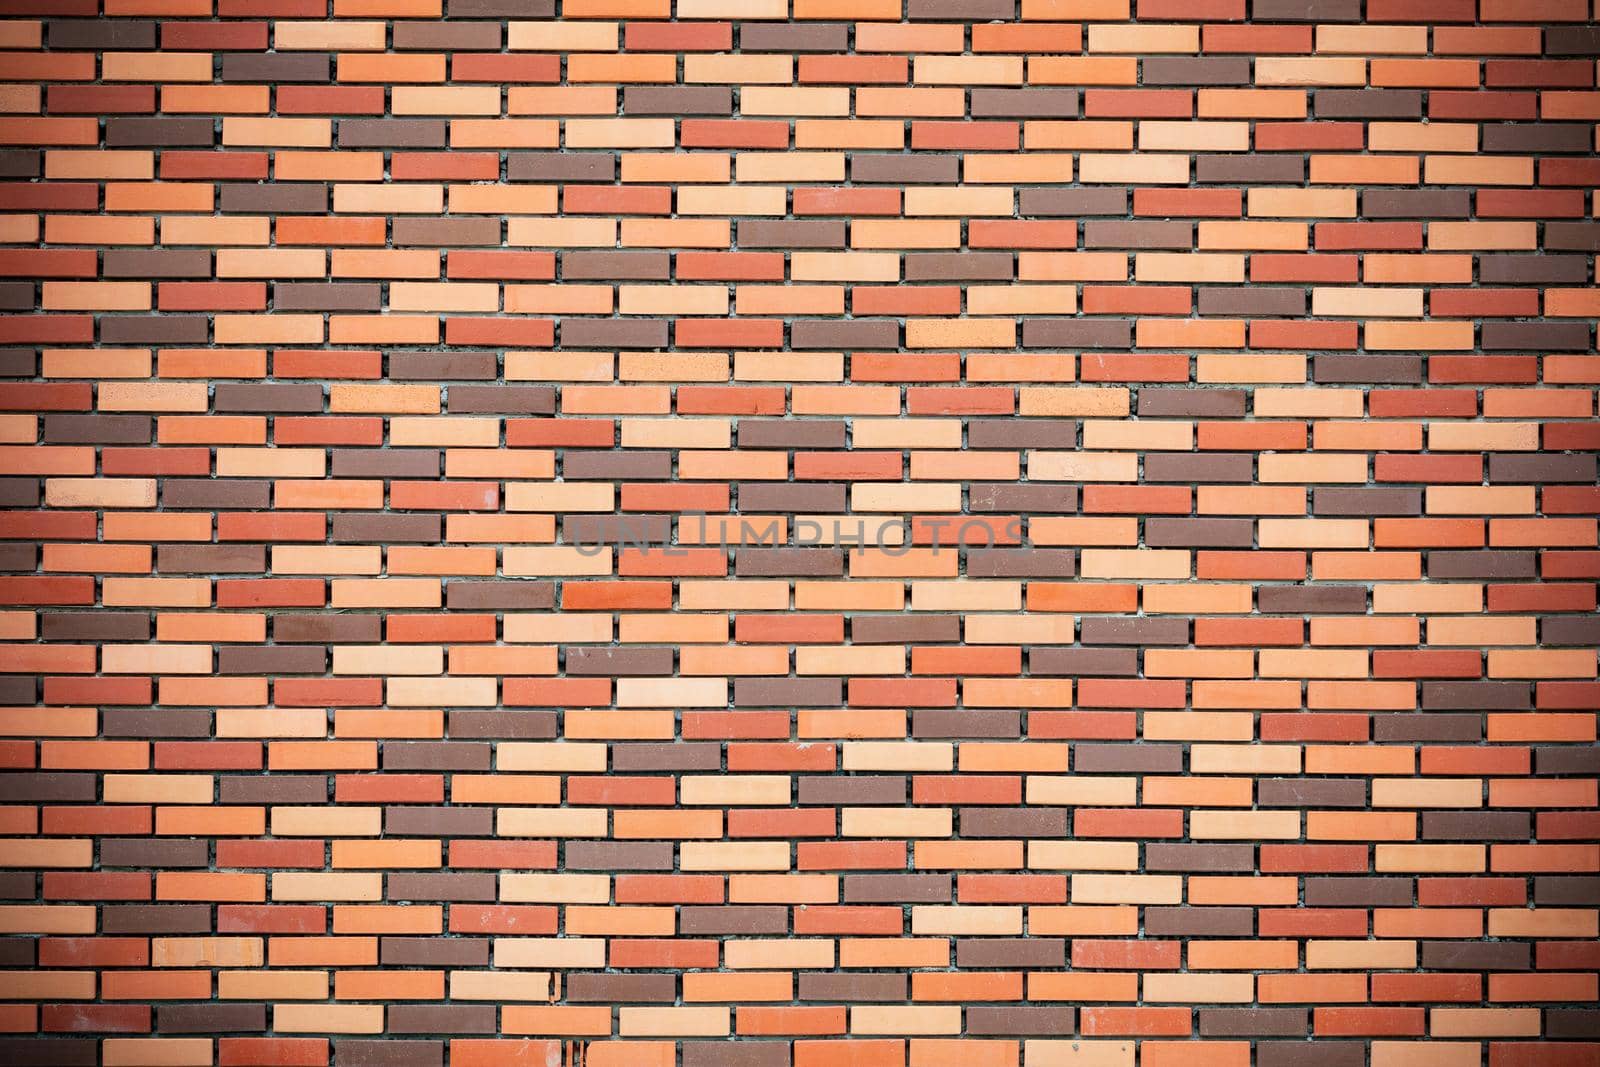 Brick wall background. Brickwall pattern by Nobilior